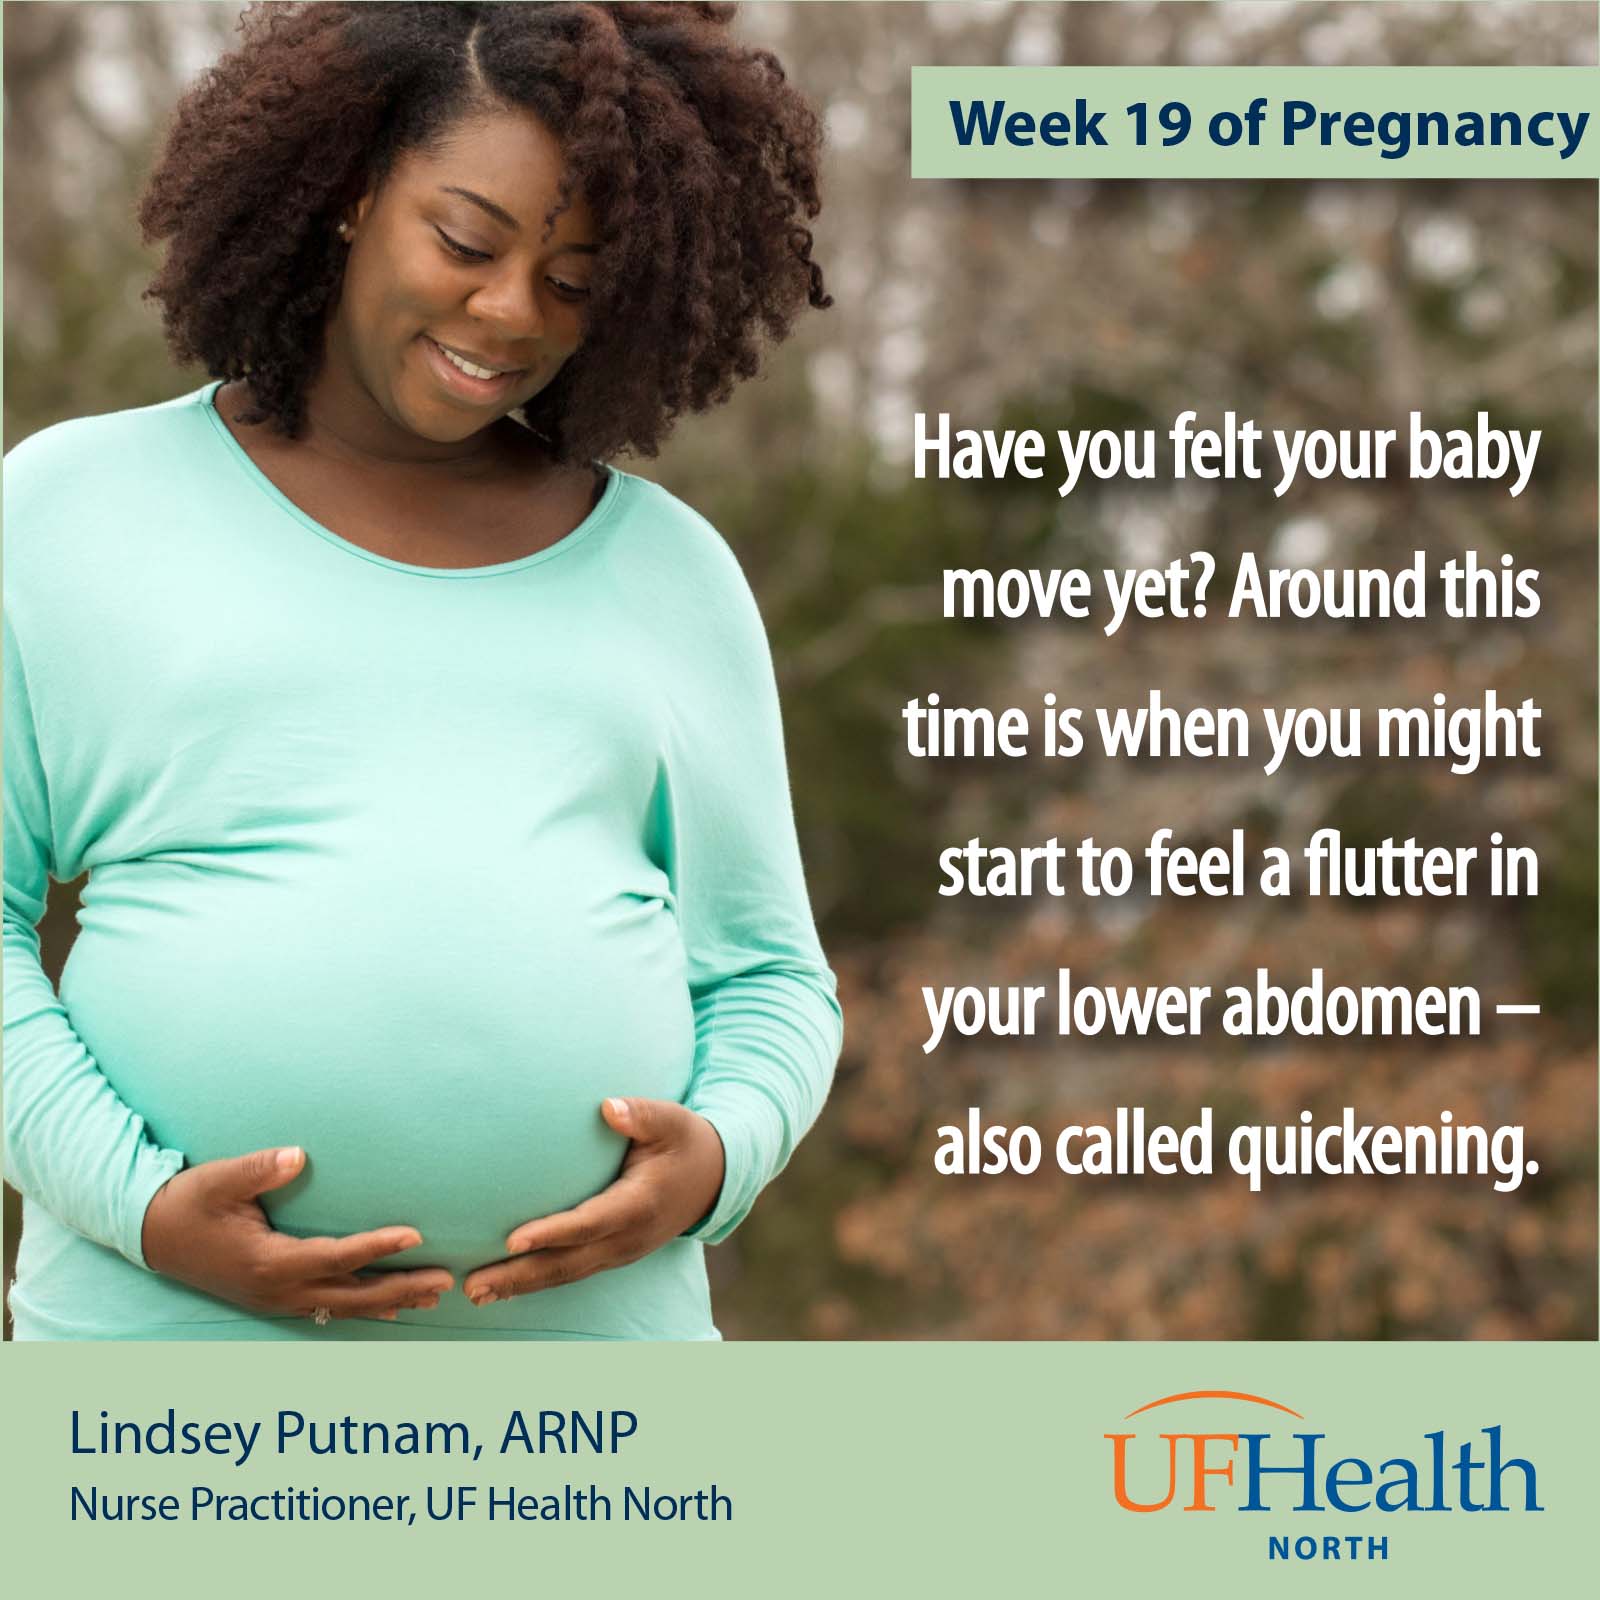 UF Health North pregnancy tip 19